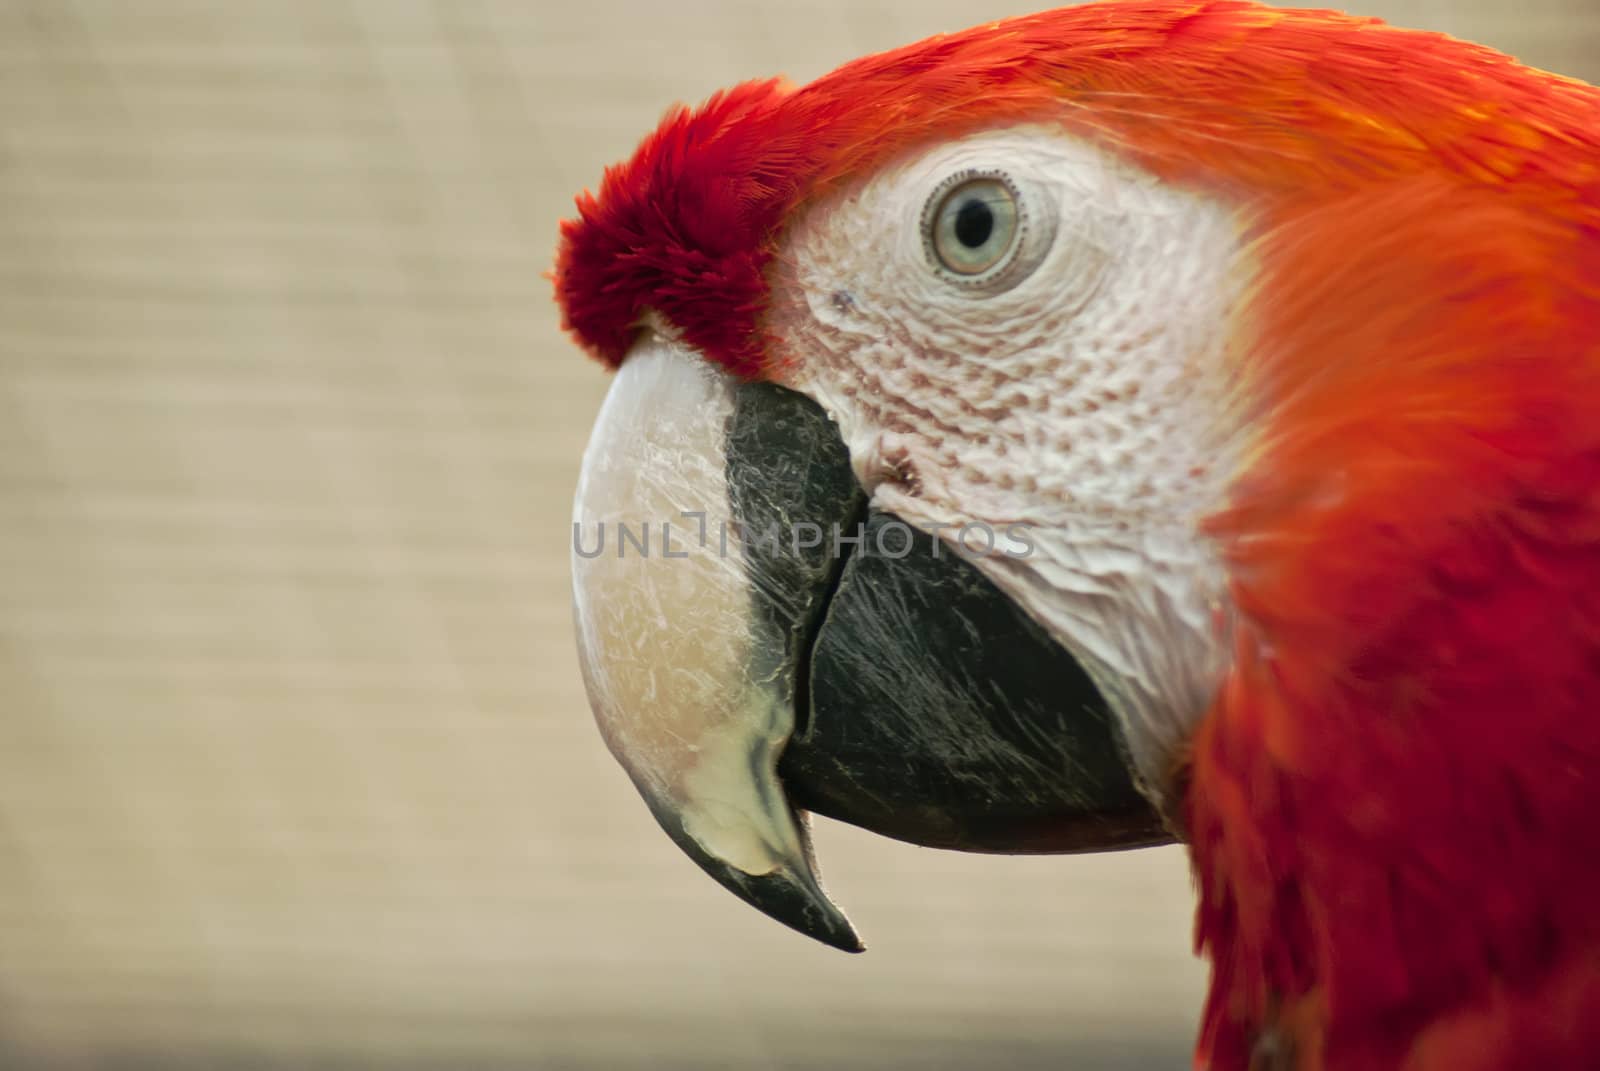 Head of red macaw parrot by gandolfocannatella